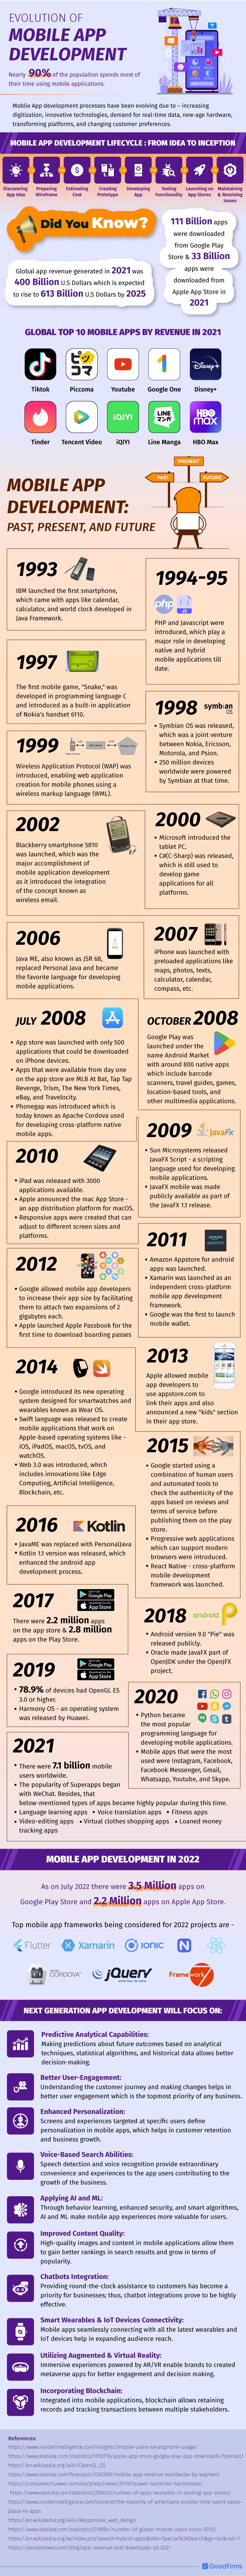 Mobile App Development Evolution Infographic